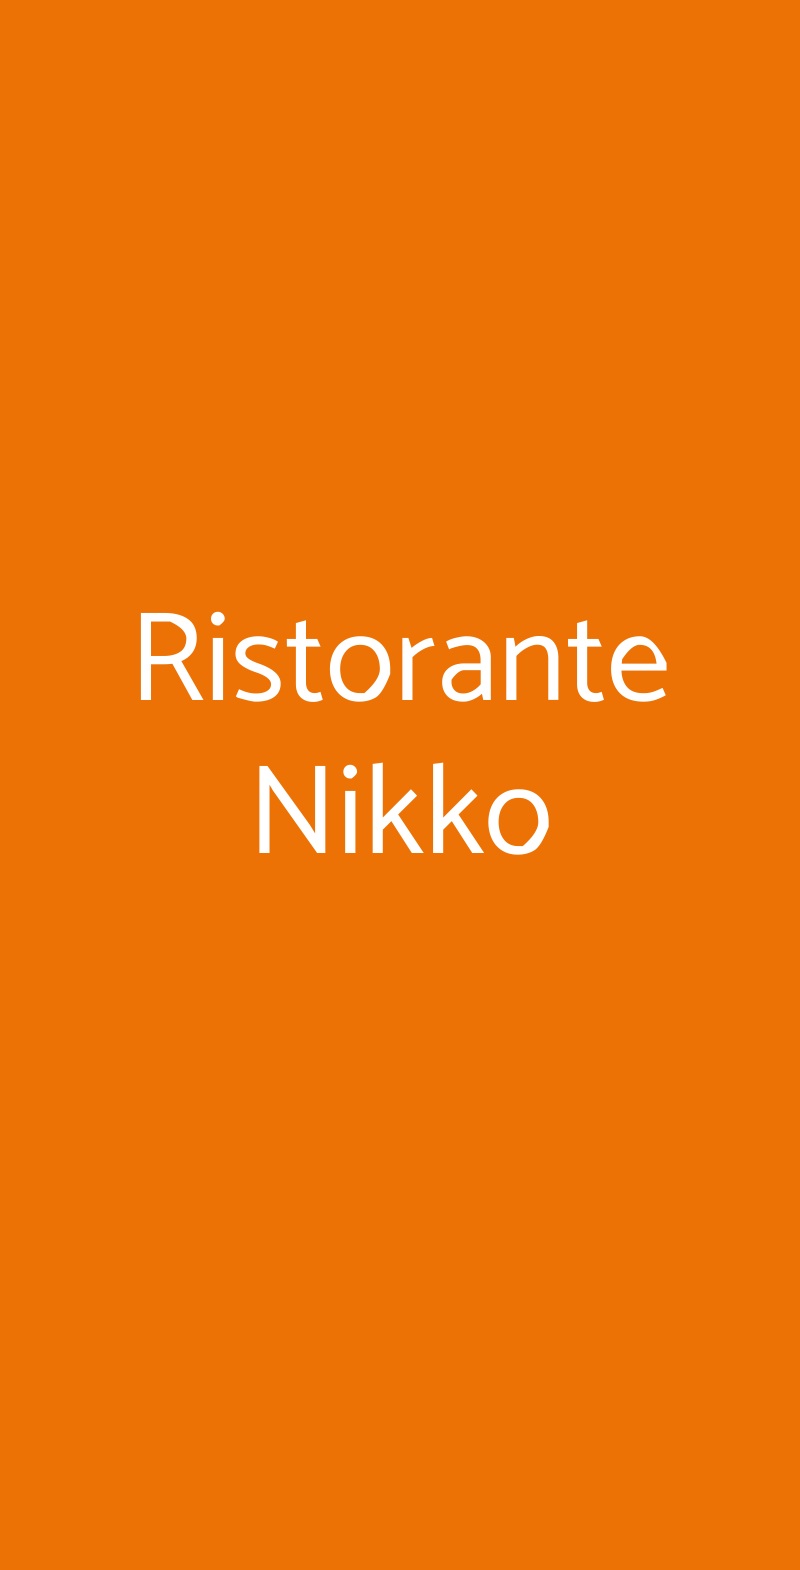 Ristorante Nikko Milano menù 1 pagina